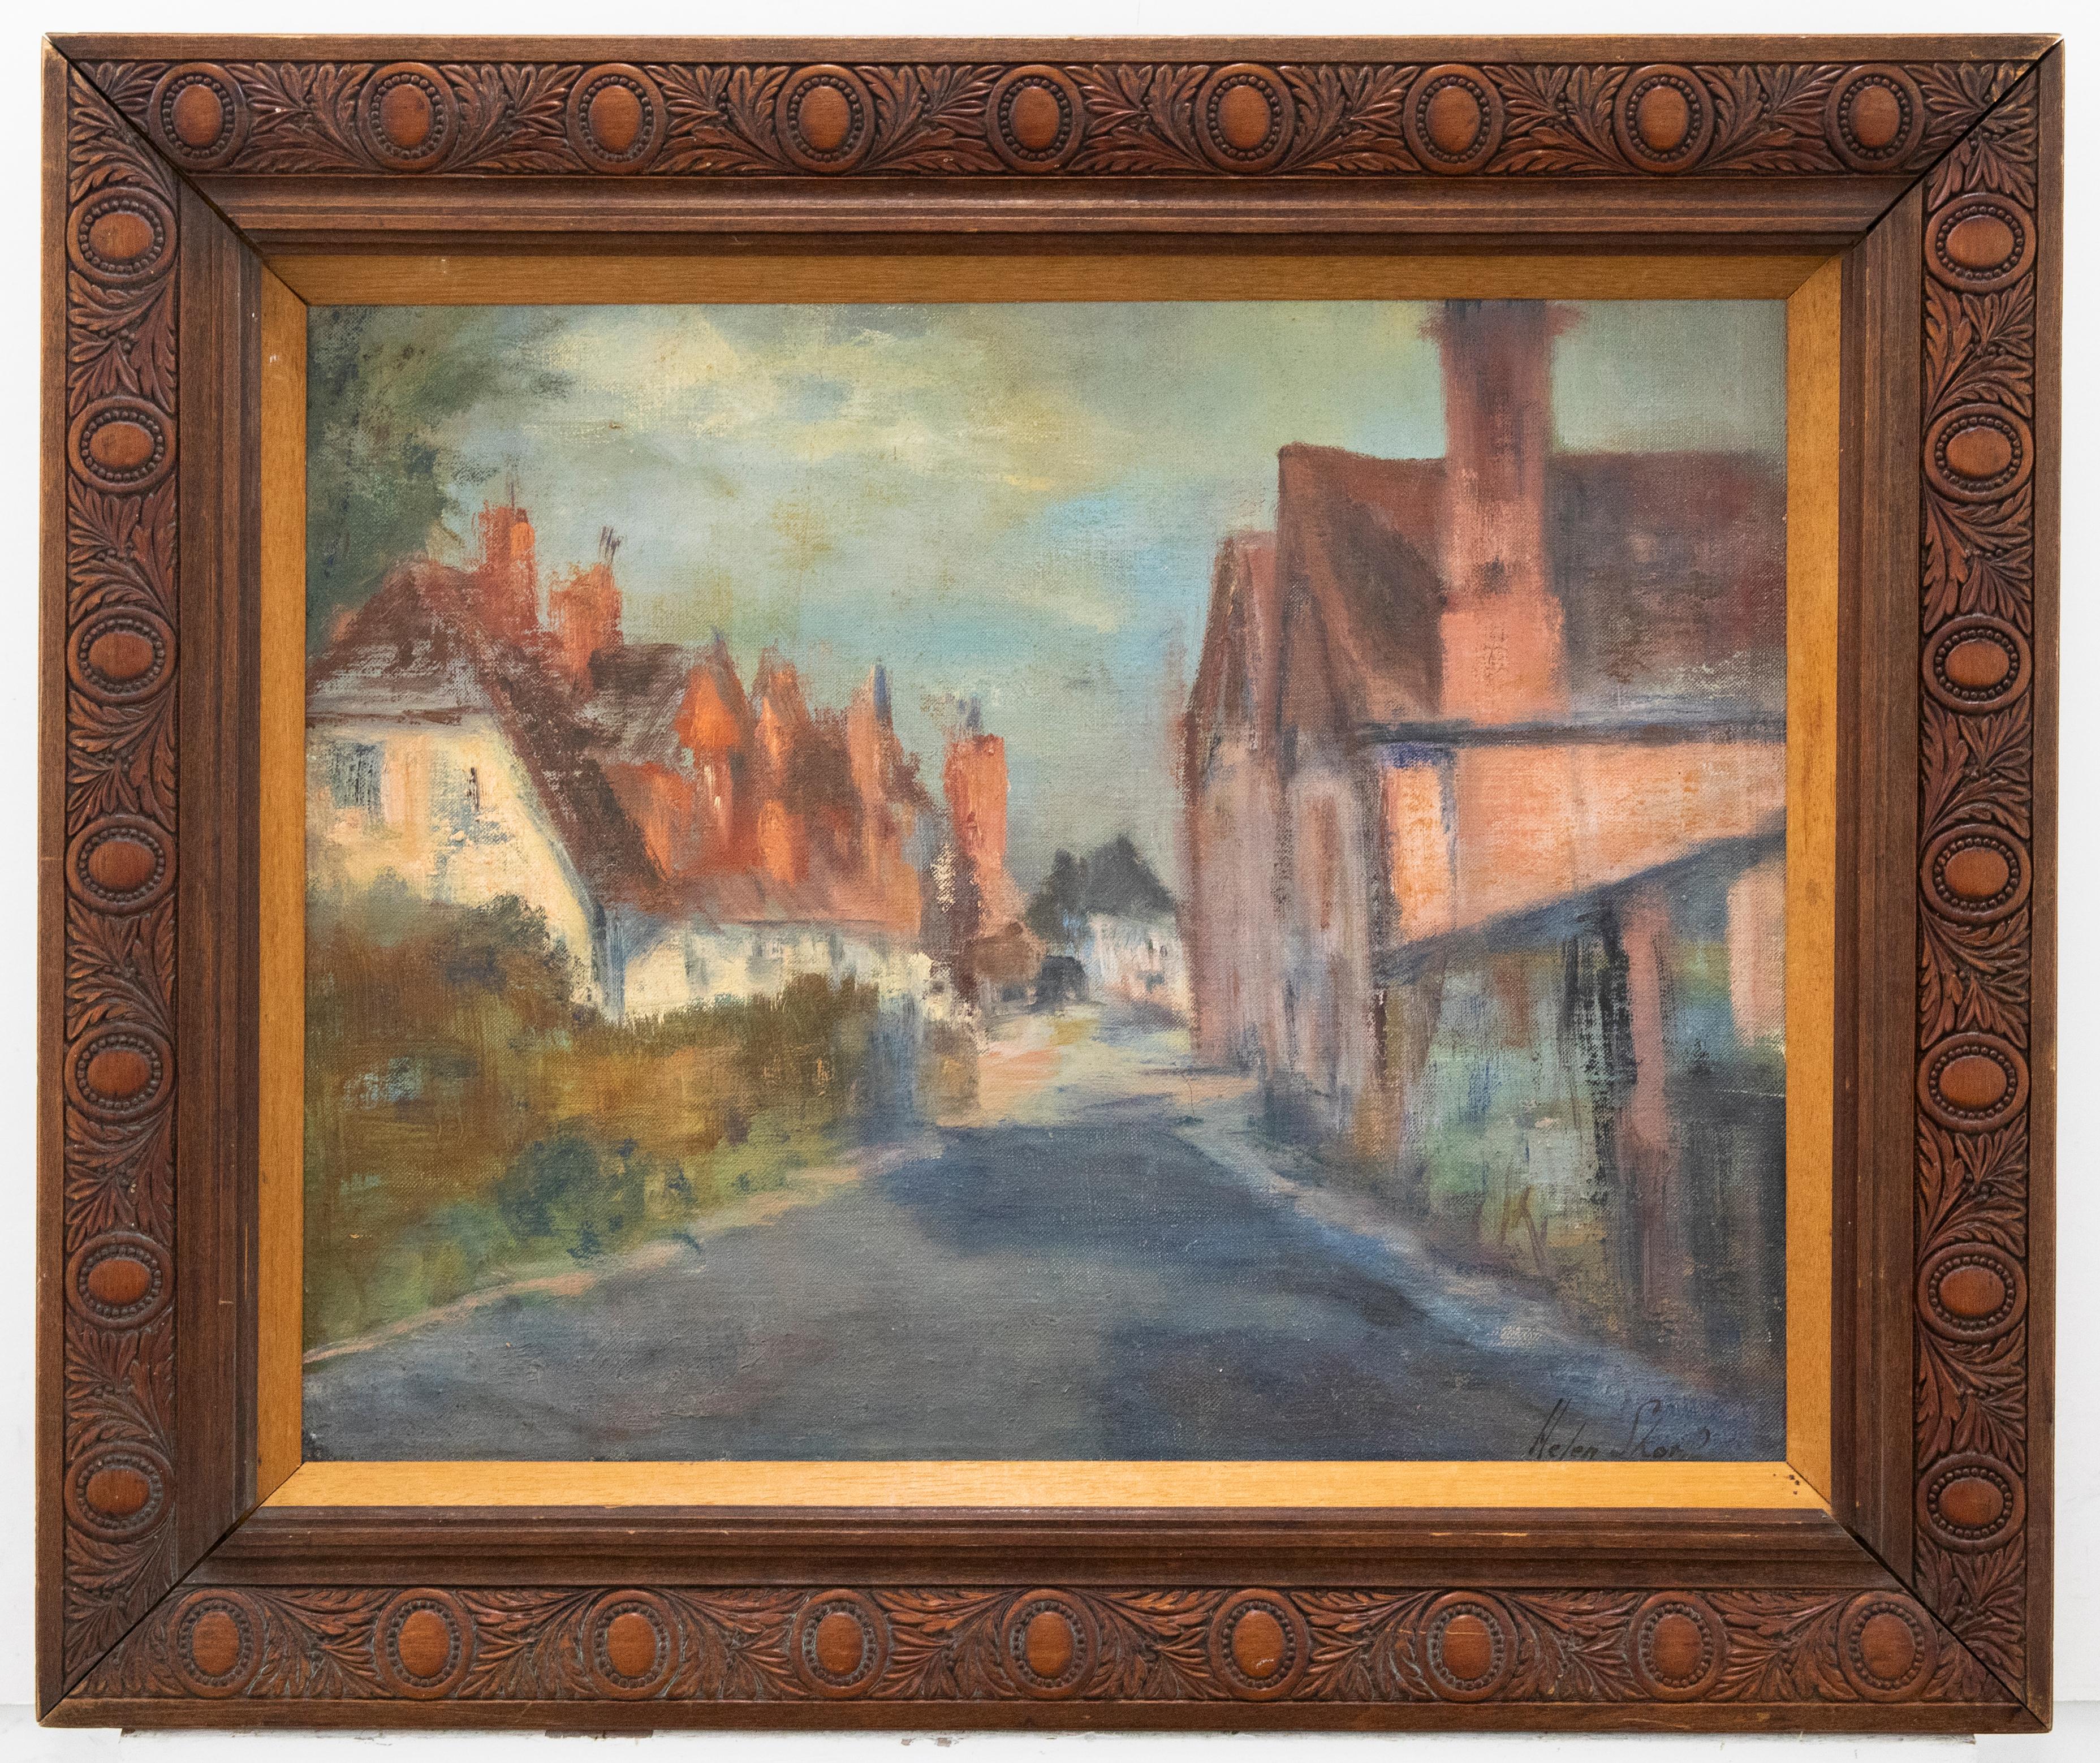 Helen Sharp Potter Landscape Painting - Helen Sharp - 20th Century Oil, Village Street